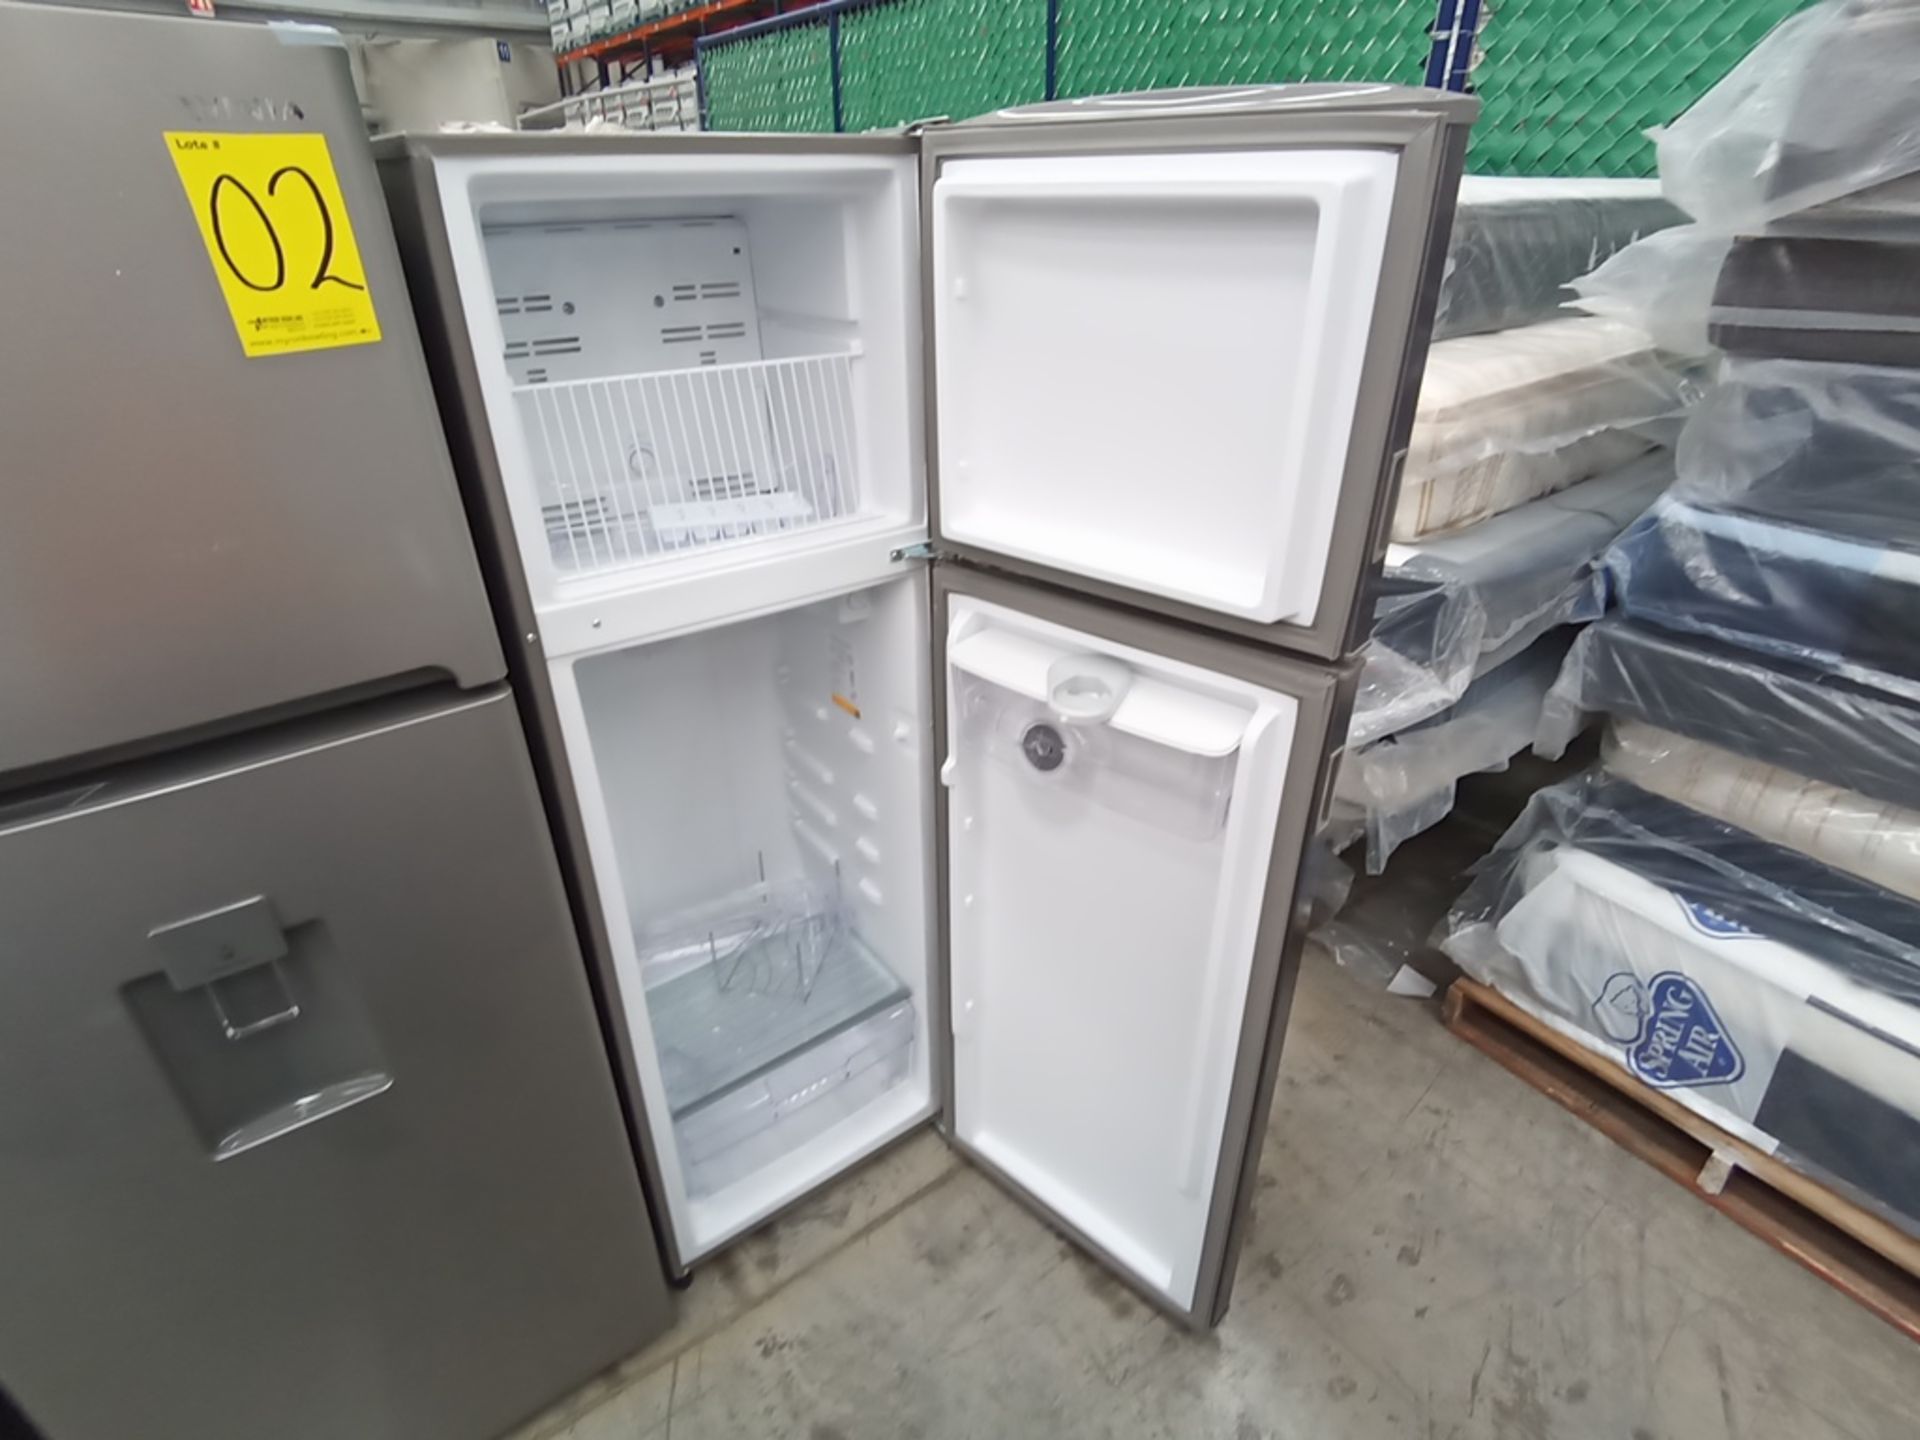 1 Refrigerador con dispensador de agua, marca Acros, Modelo AT096FG01, Serie VRA0636575, Color Gris - Image 7 of 10